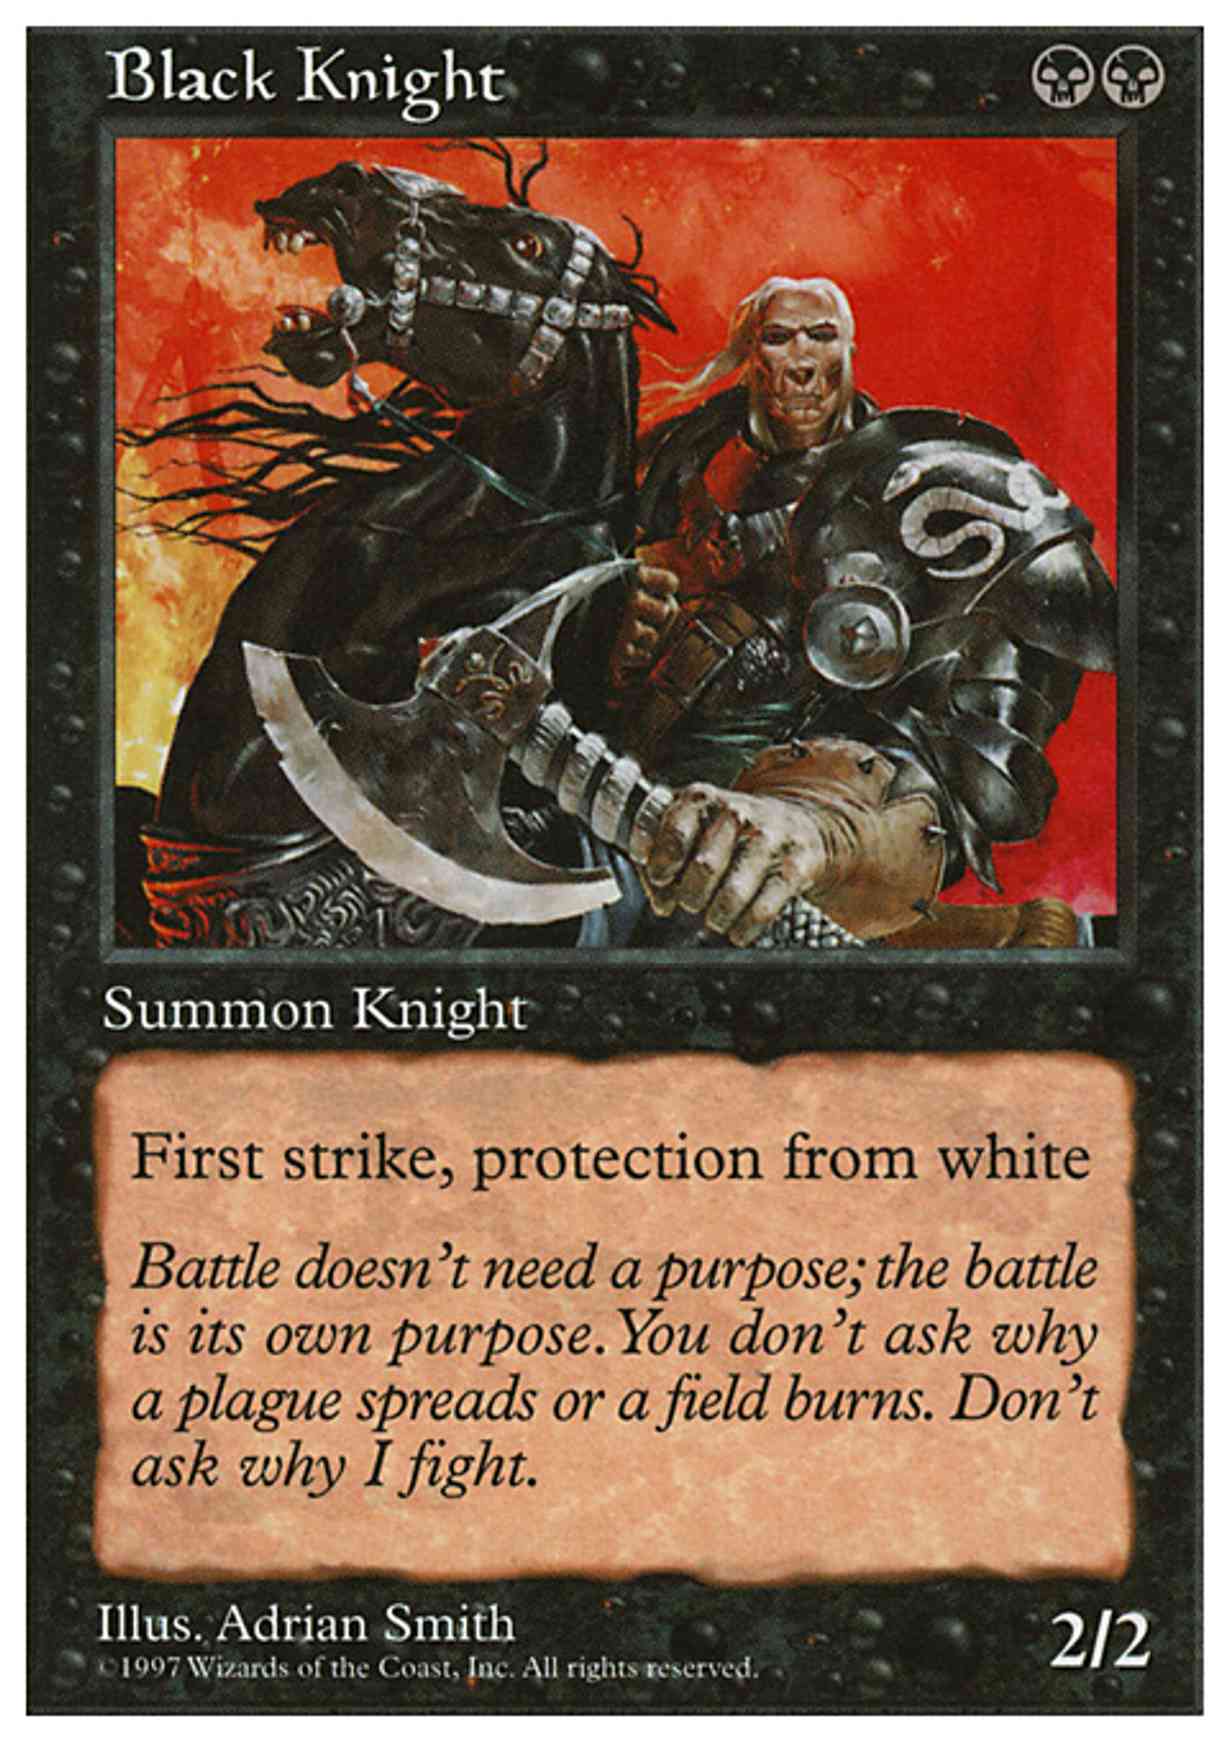 Black Knight magic card front